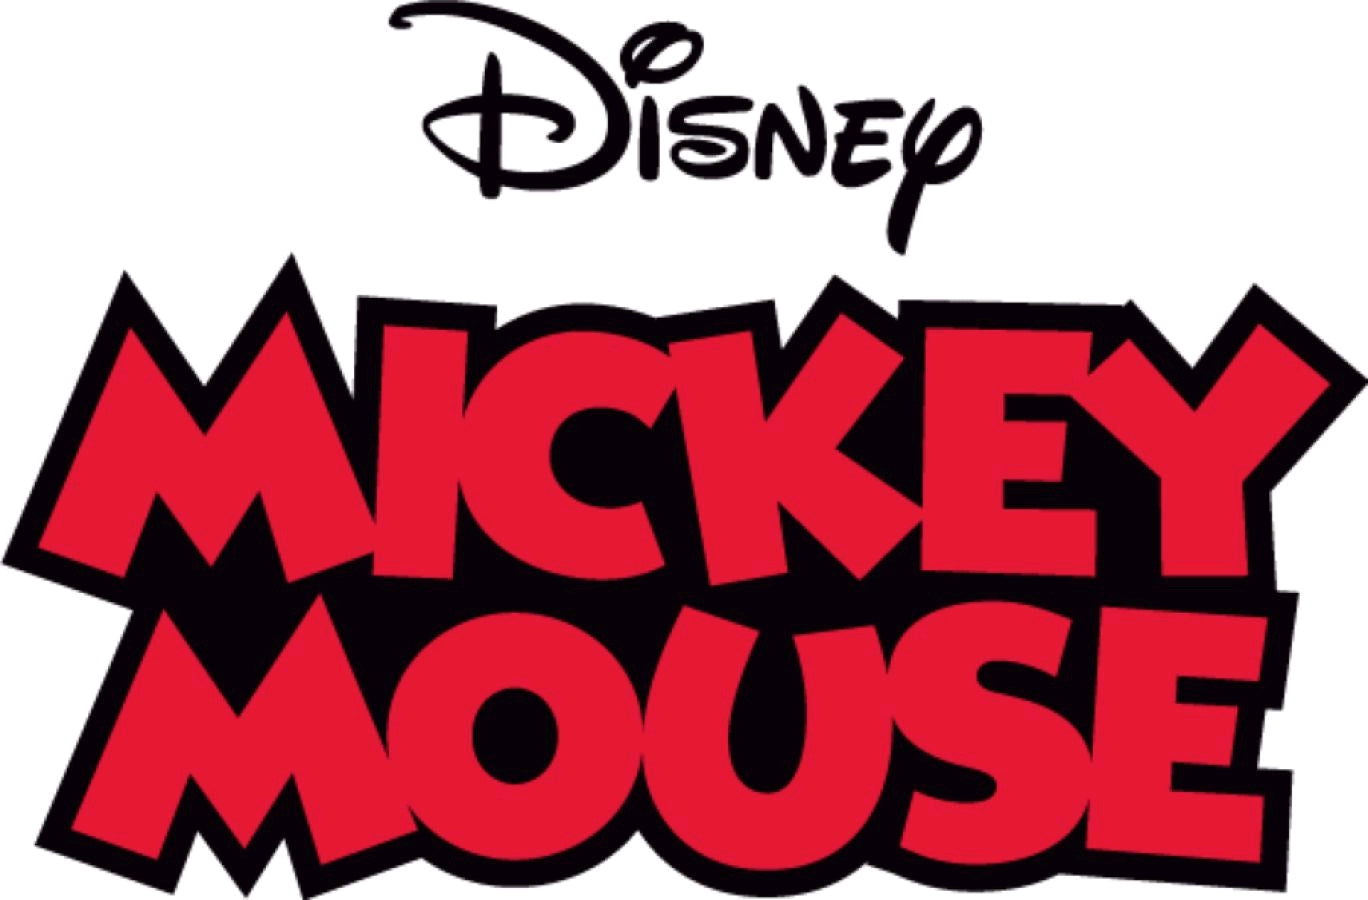 Mickey Mouse - Daisy Duck 4" Plush